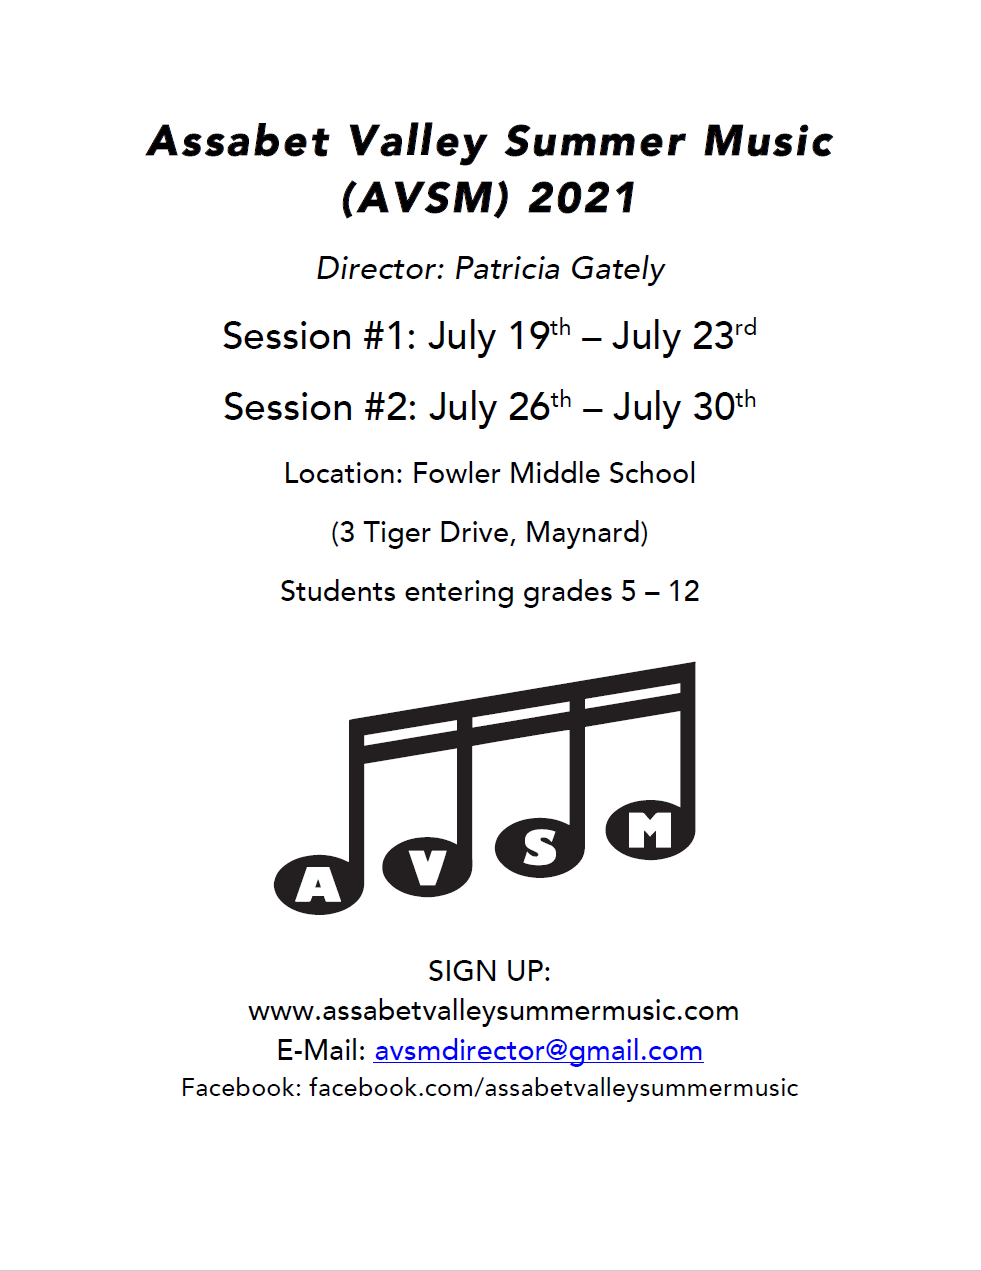 Sign up for the Assabet Valley Summer Music program!